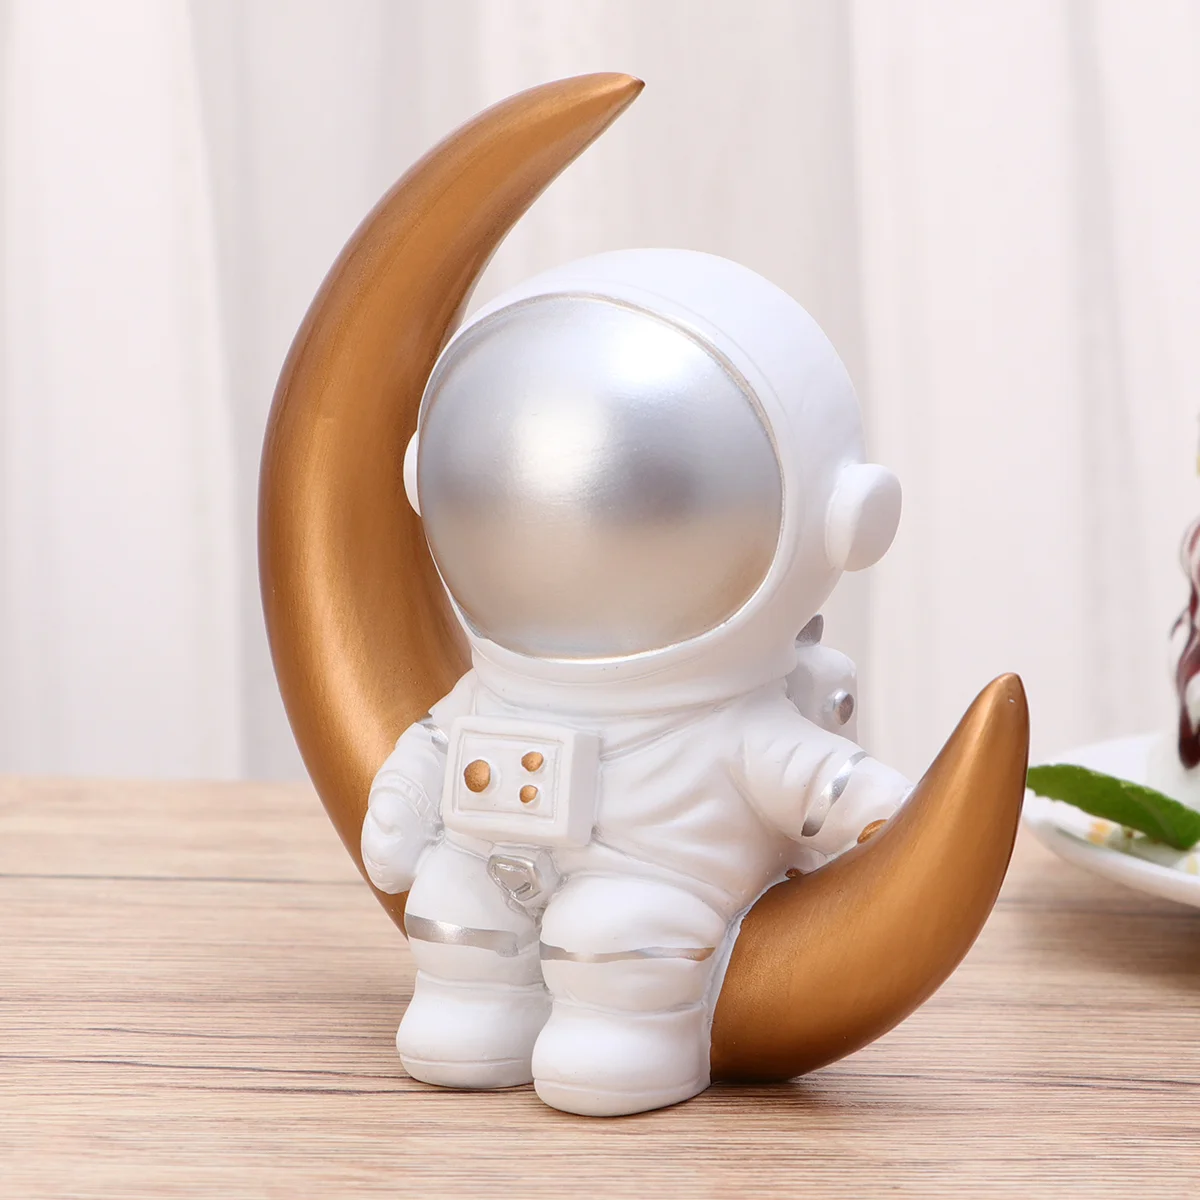 

Astronaut Ornament Cake Resin Figurine Toy Figure Spaceman Model Decoration Sculpture Moon Decor Table Party Car Statues Space